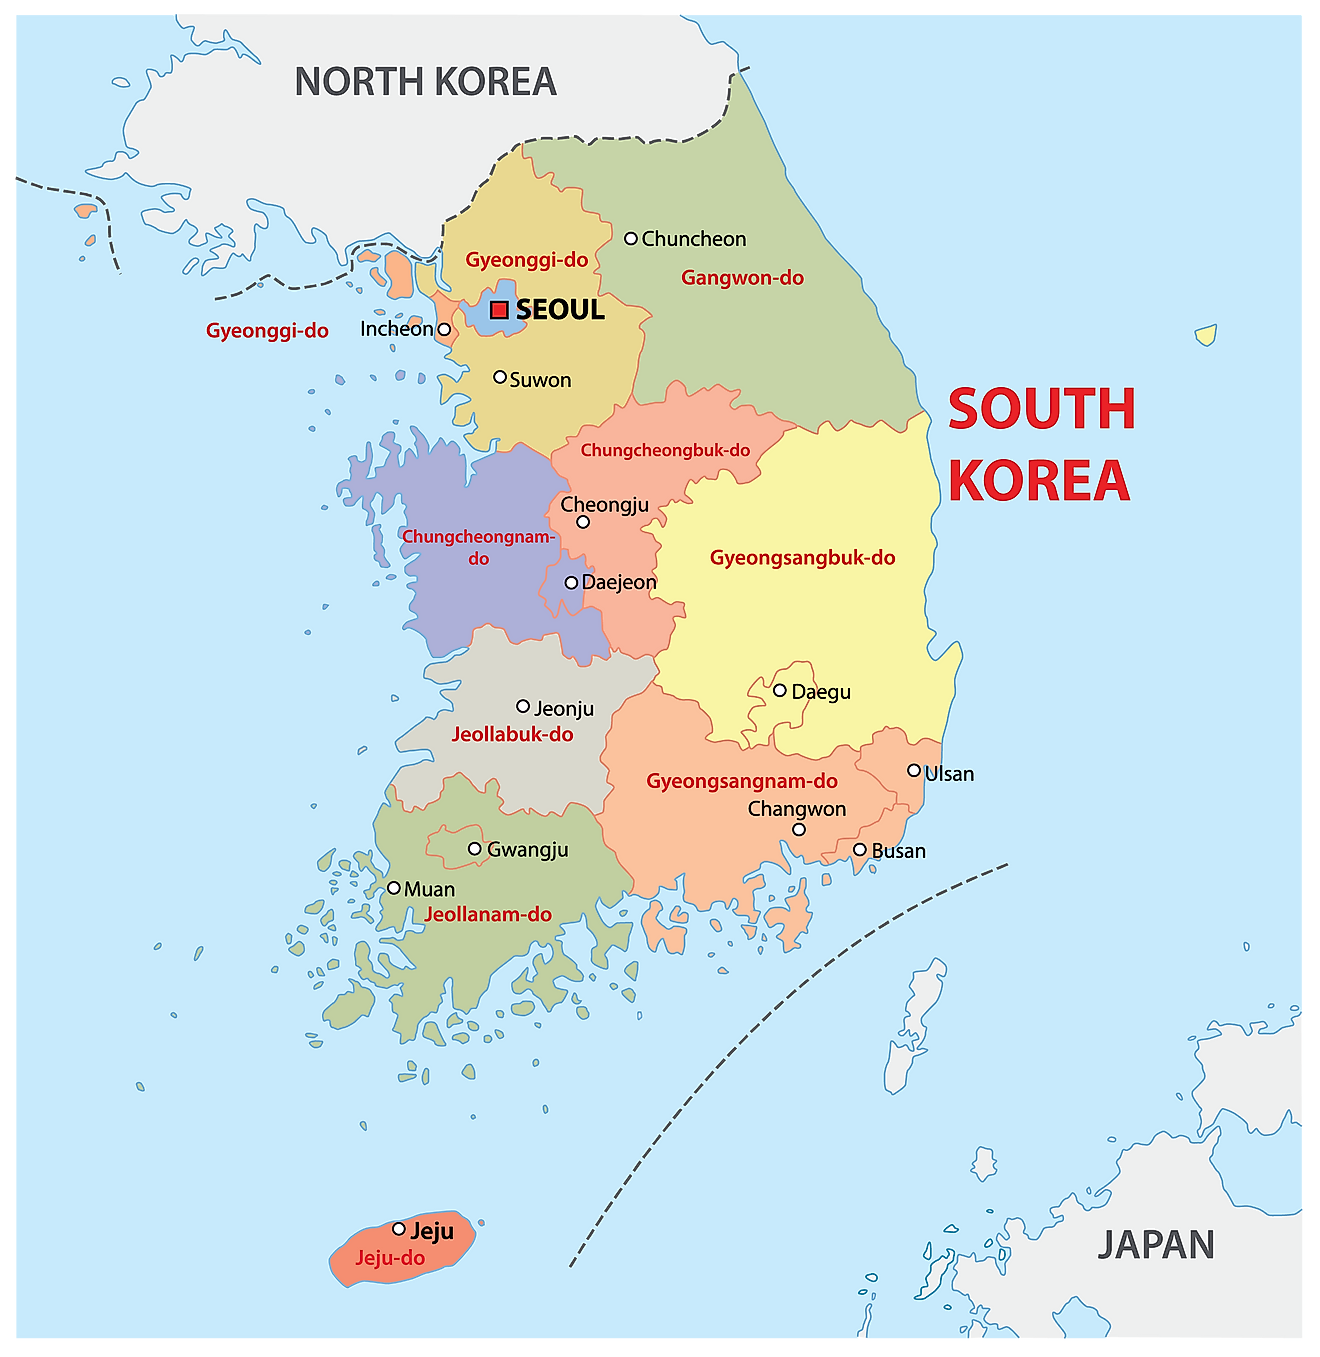 South South Korea Map South Korea Maps & Facts - World Atlas